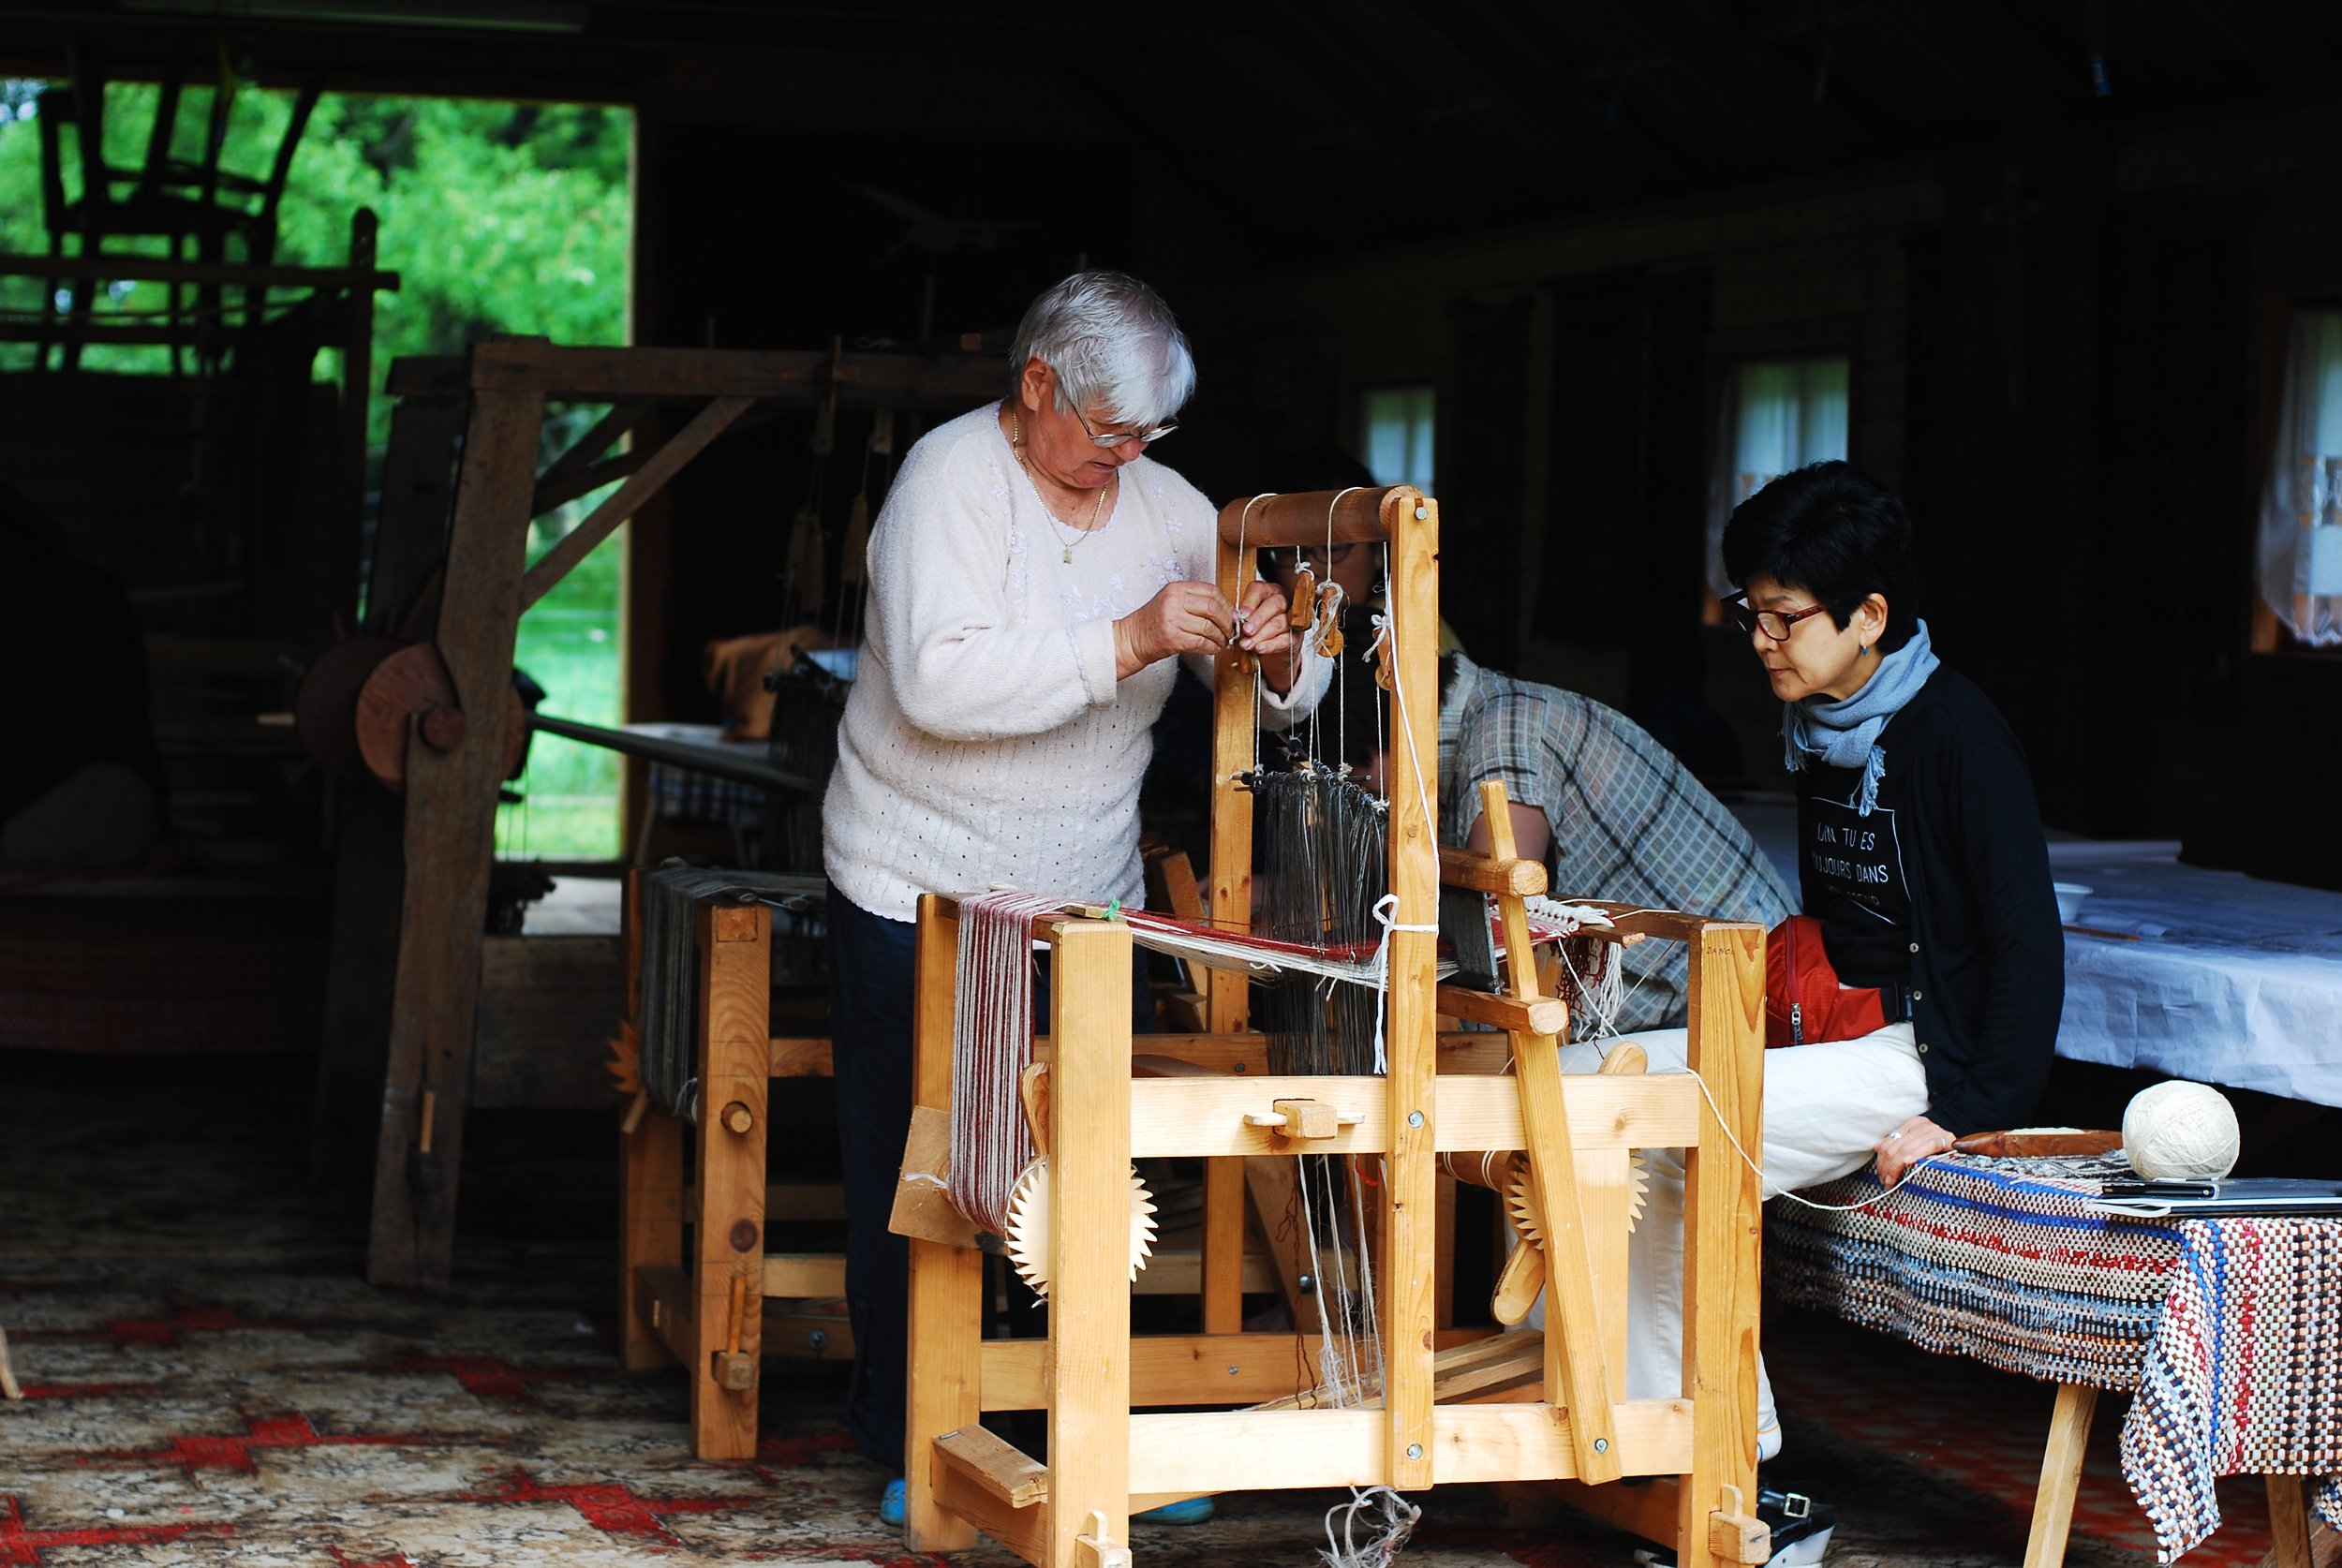 Teresa Pryzmont showing Japanese visitors the ropes of weaving